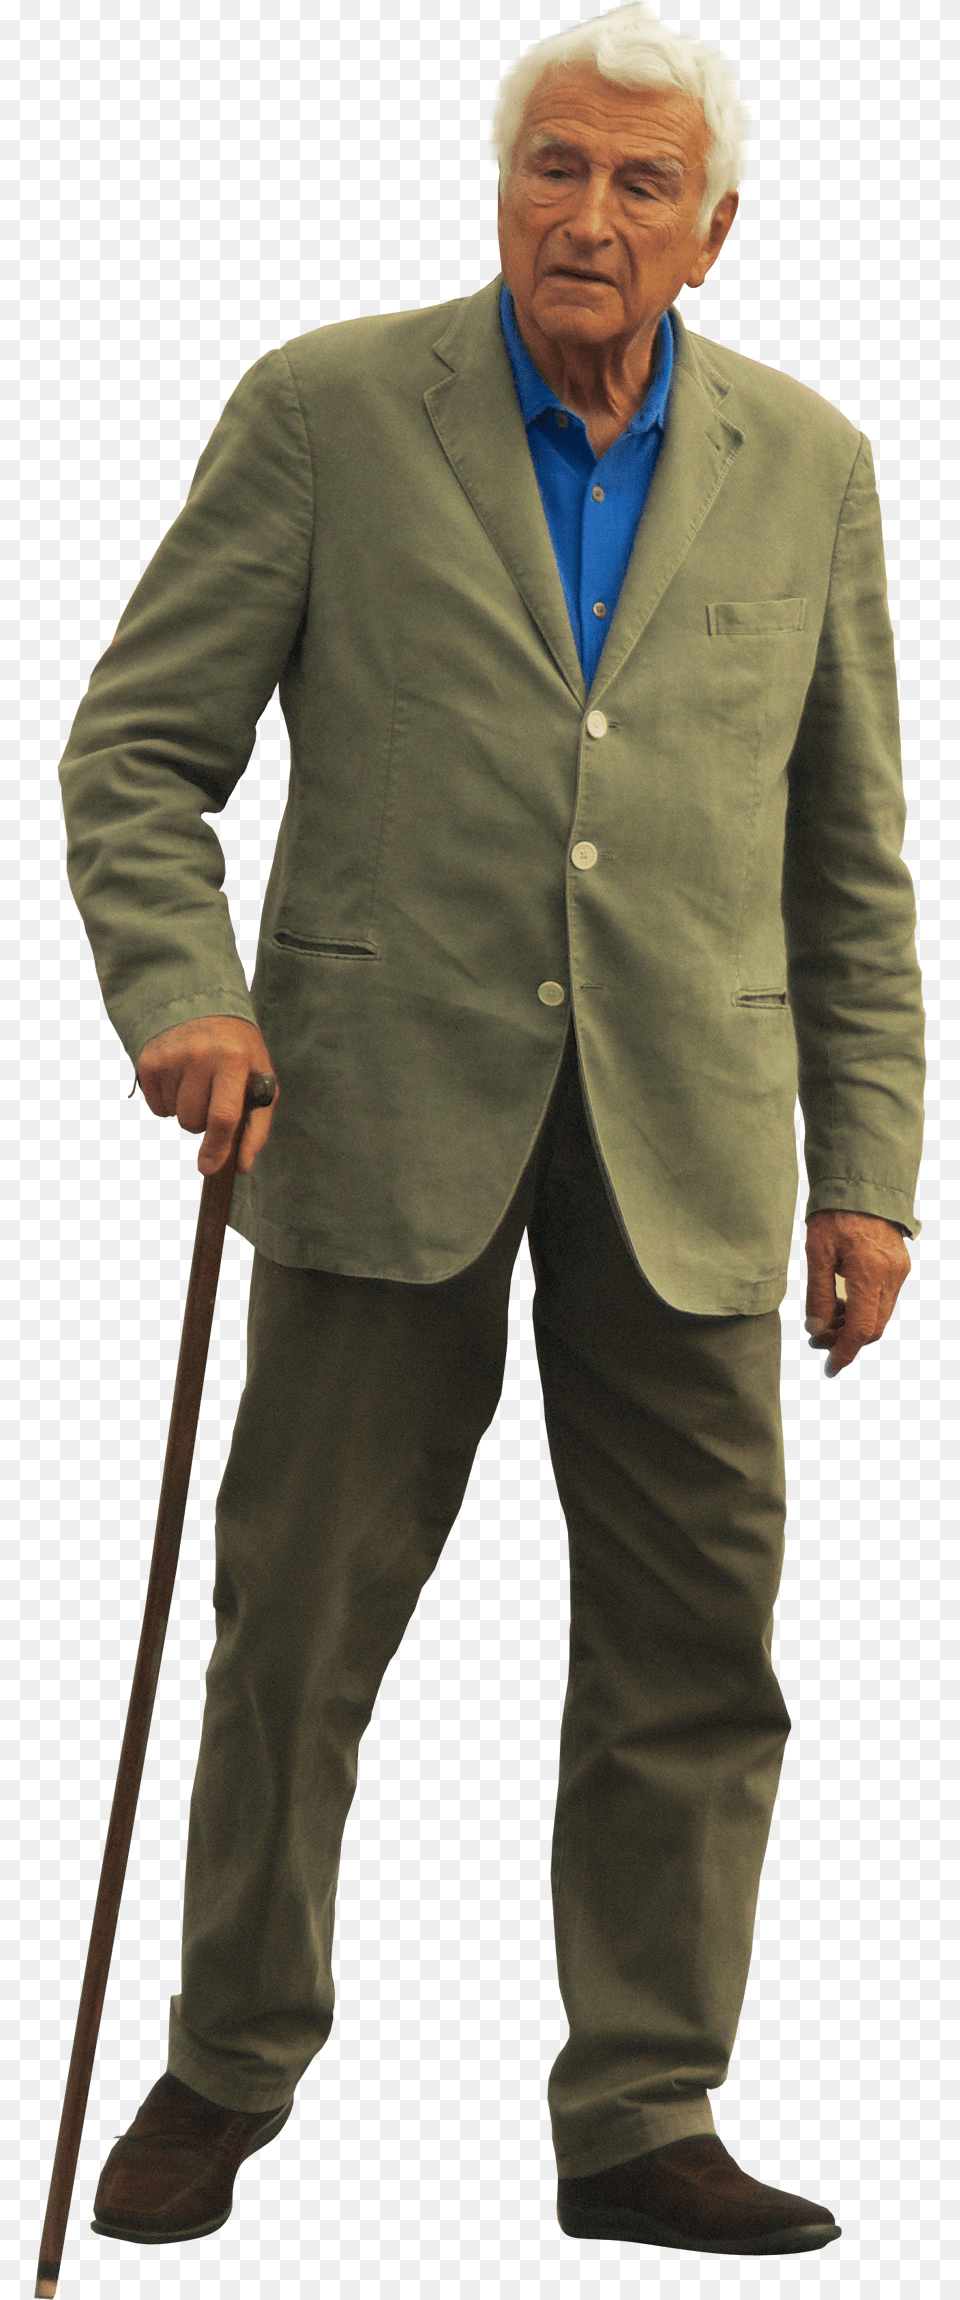 Old Man Blazer For Old Man, Suit, Clothing, Coat, Formal Wear Png